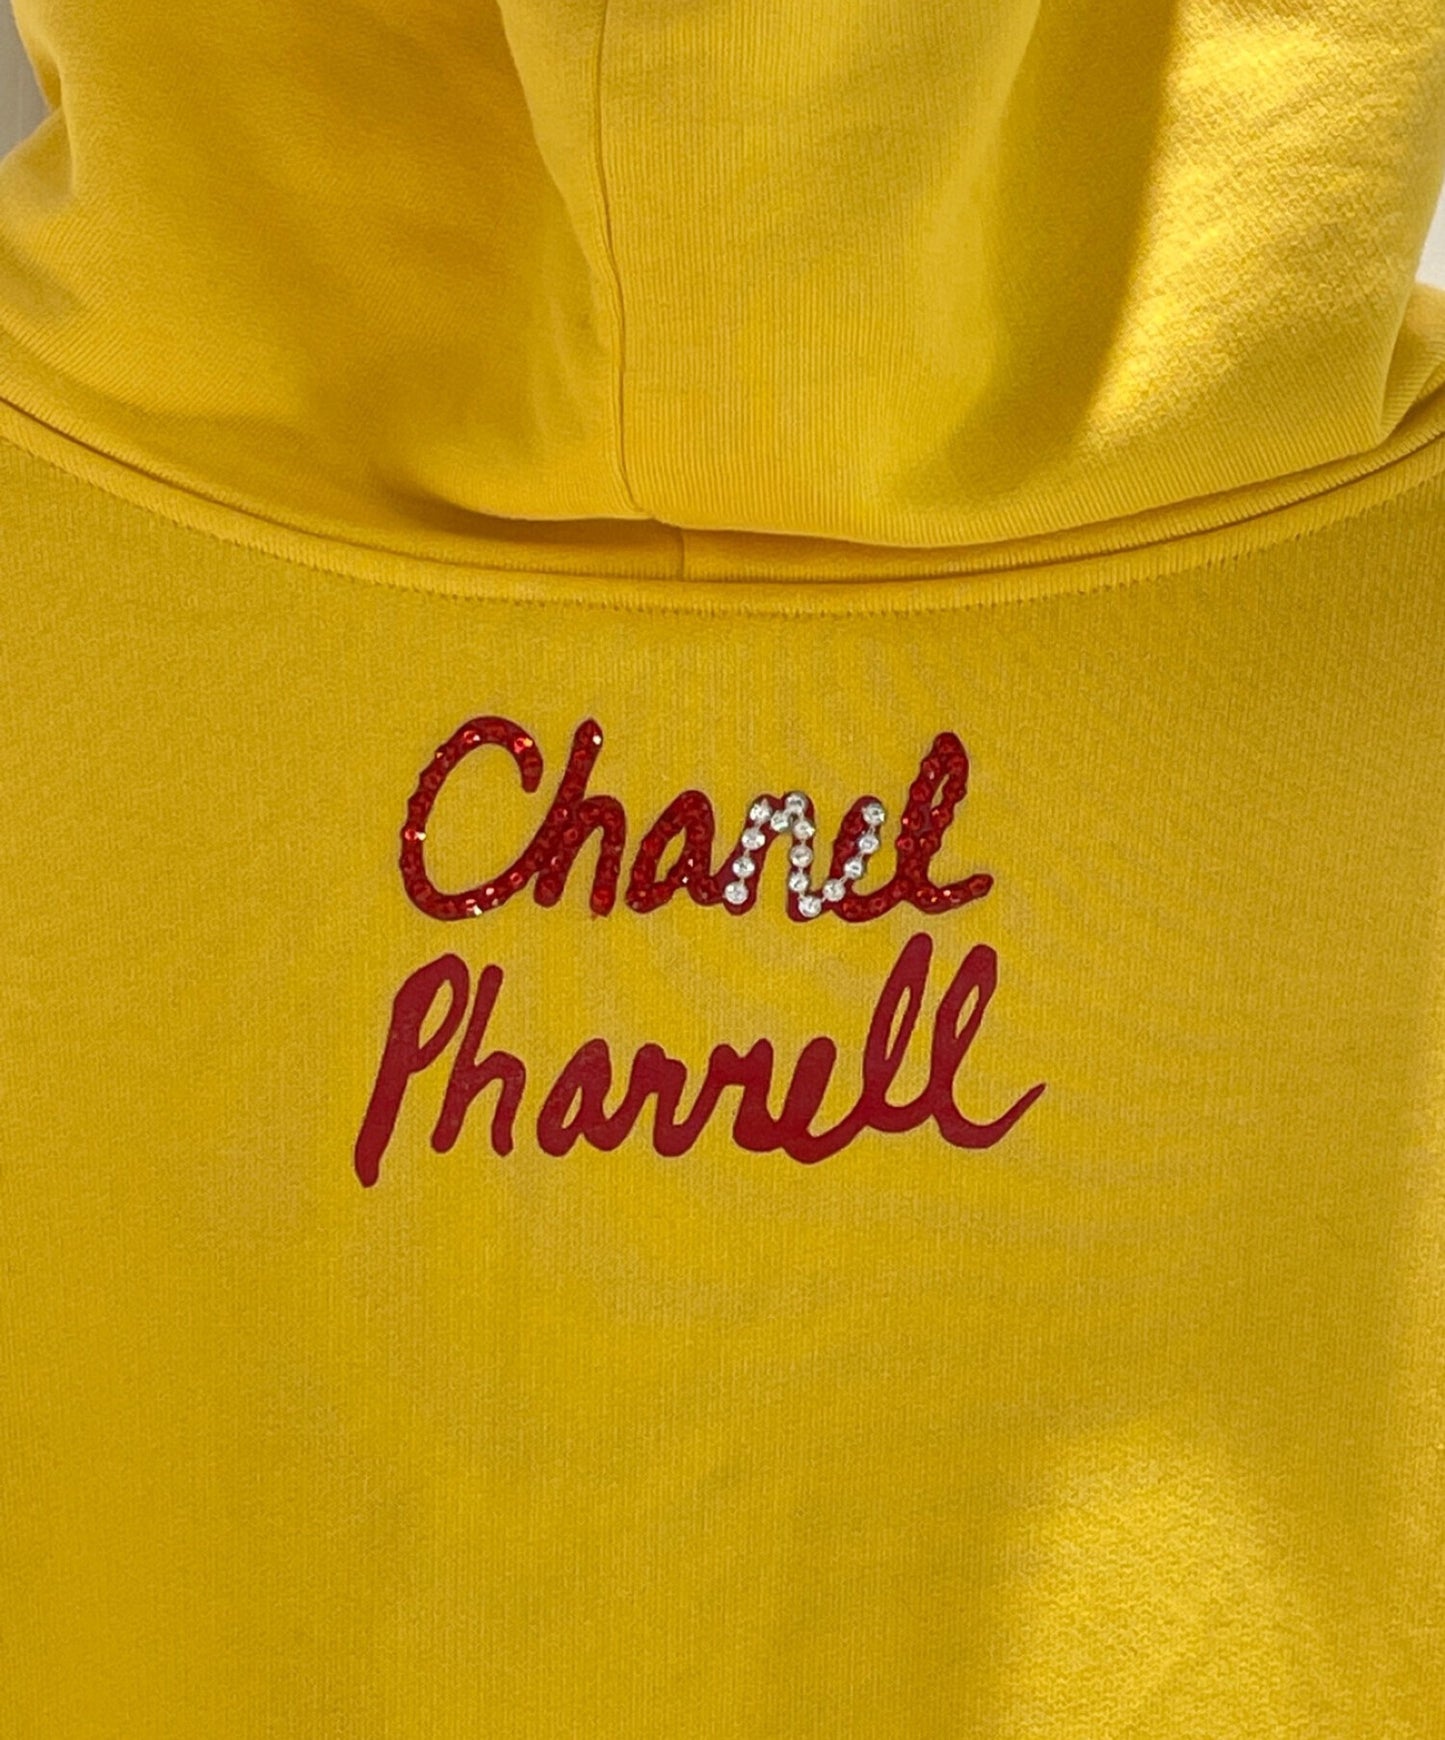 Chanel Pharrell Williams Hoodie Limited Collaboration การทำงานร่วมกัน